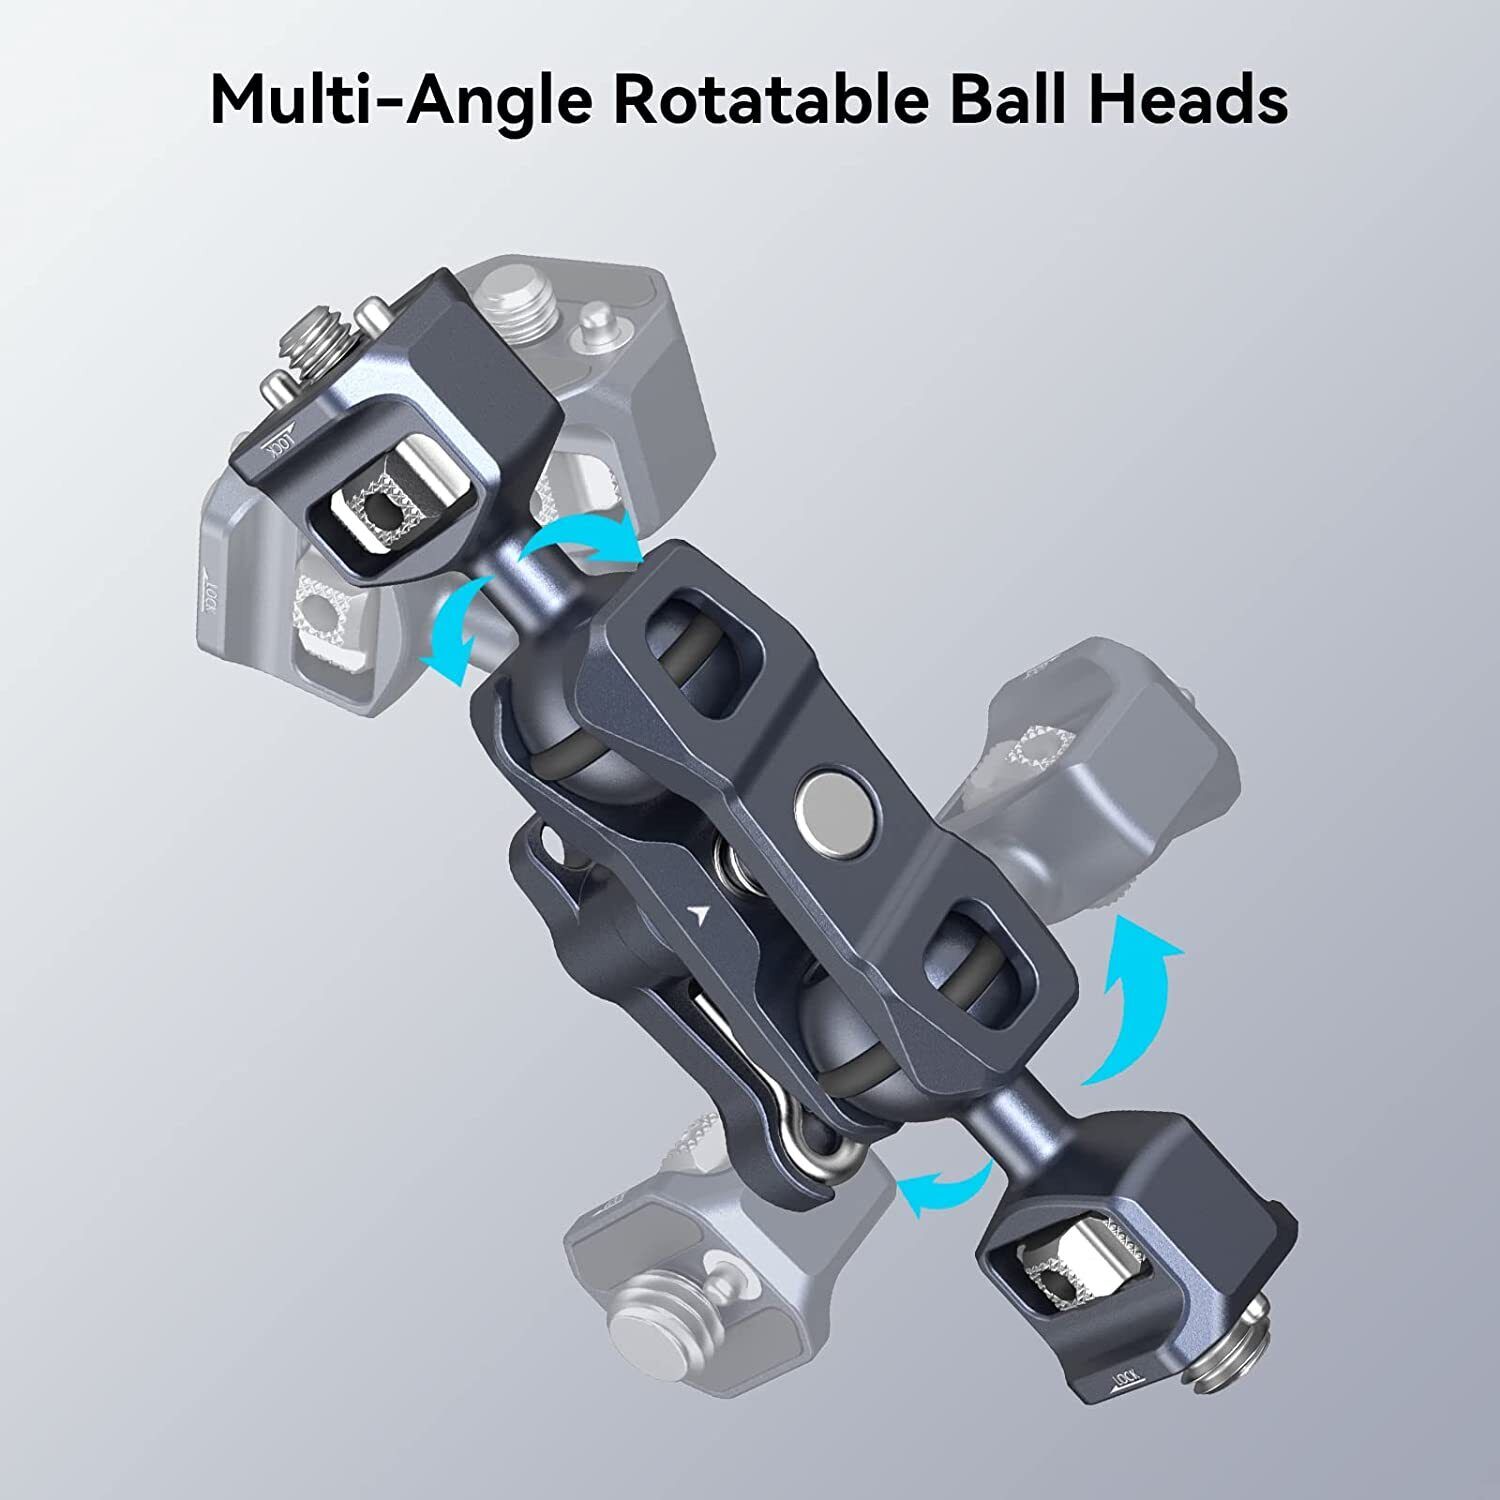 SMALLRIG Articulating Arm Dual Ball Heads 3874